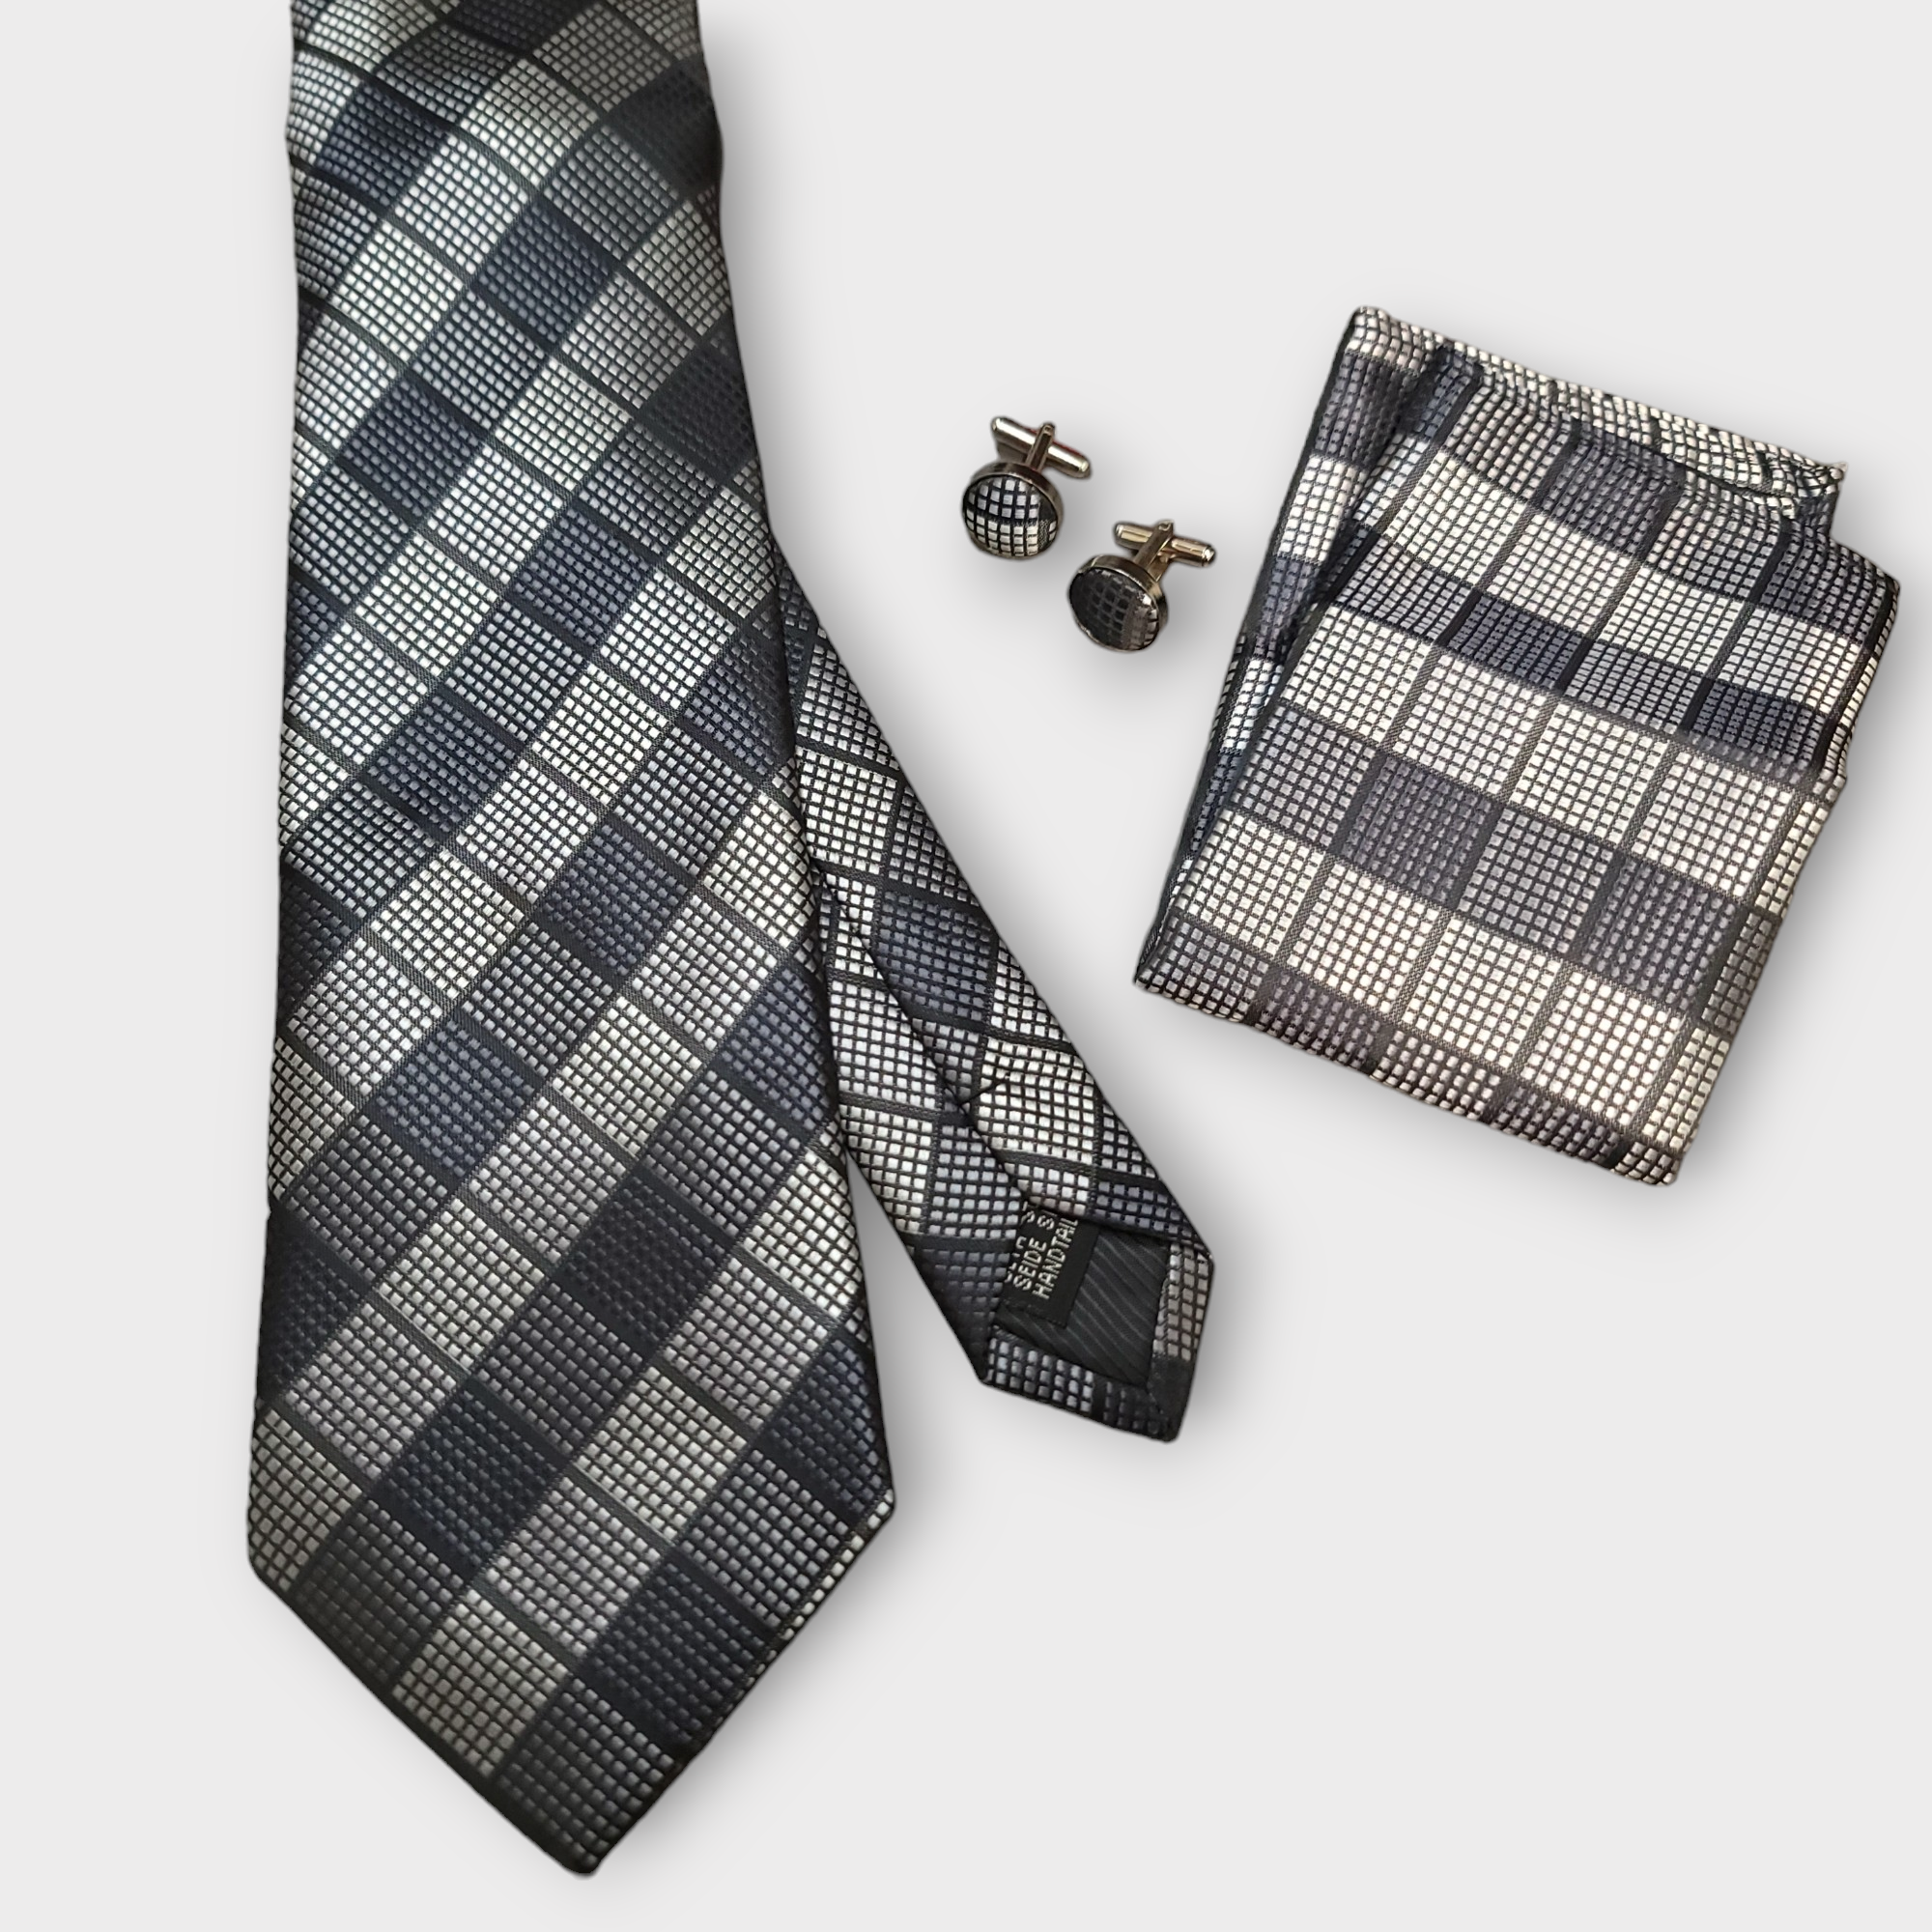 Plaid Tie Set of Pocket Square and Cufflinks